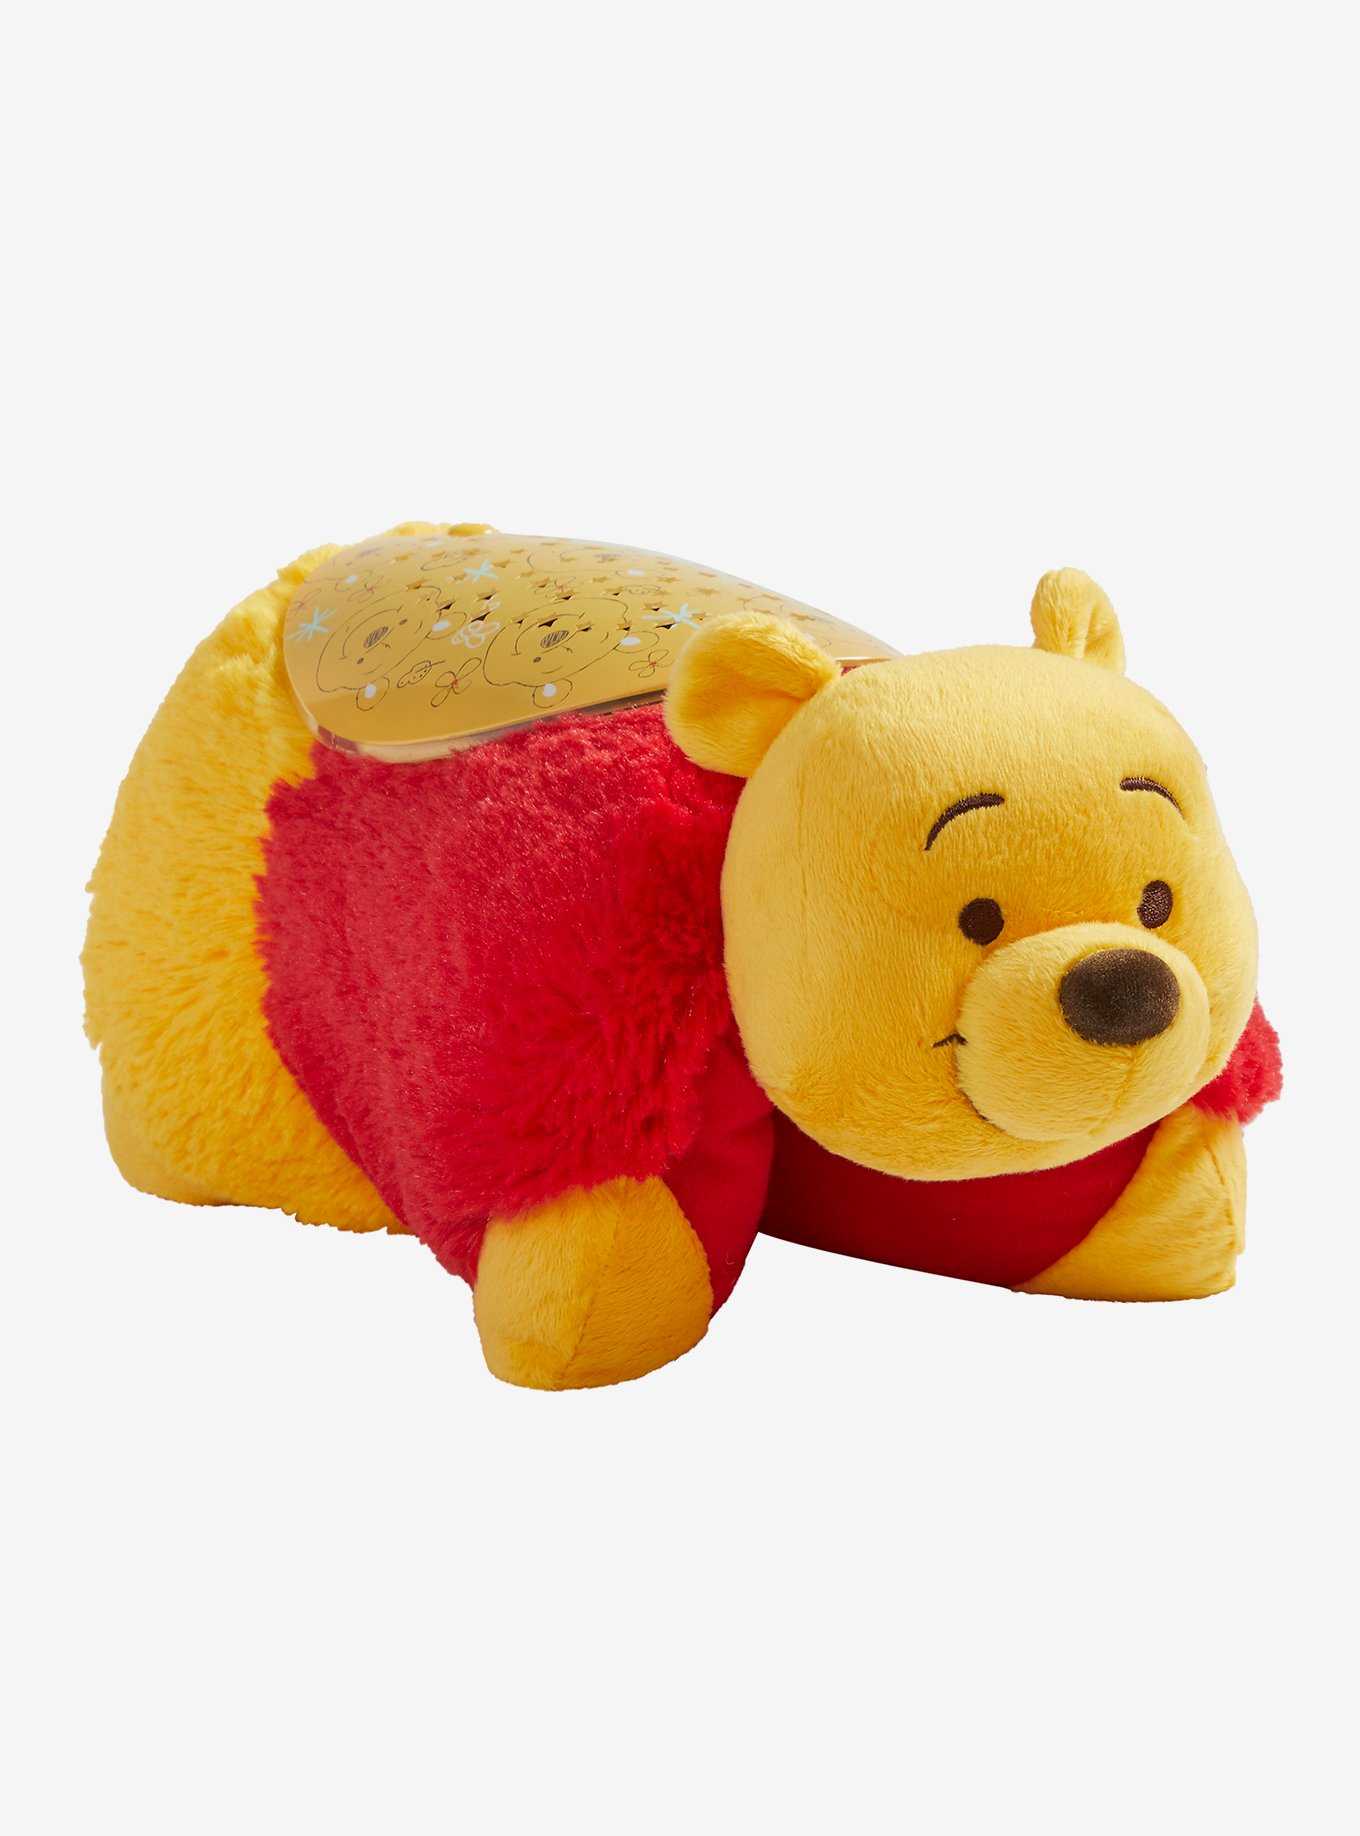 Disney Winnie The Pooh Sleeptime Lite Pillow Pets Plush Toy, , hi-res